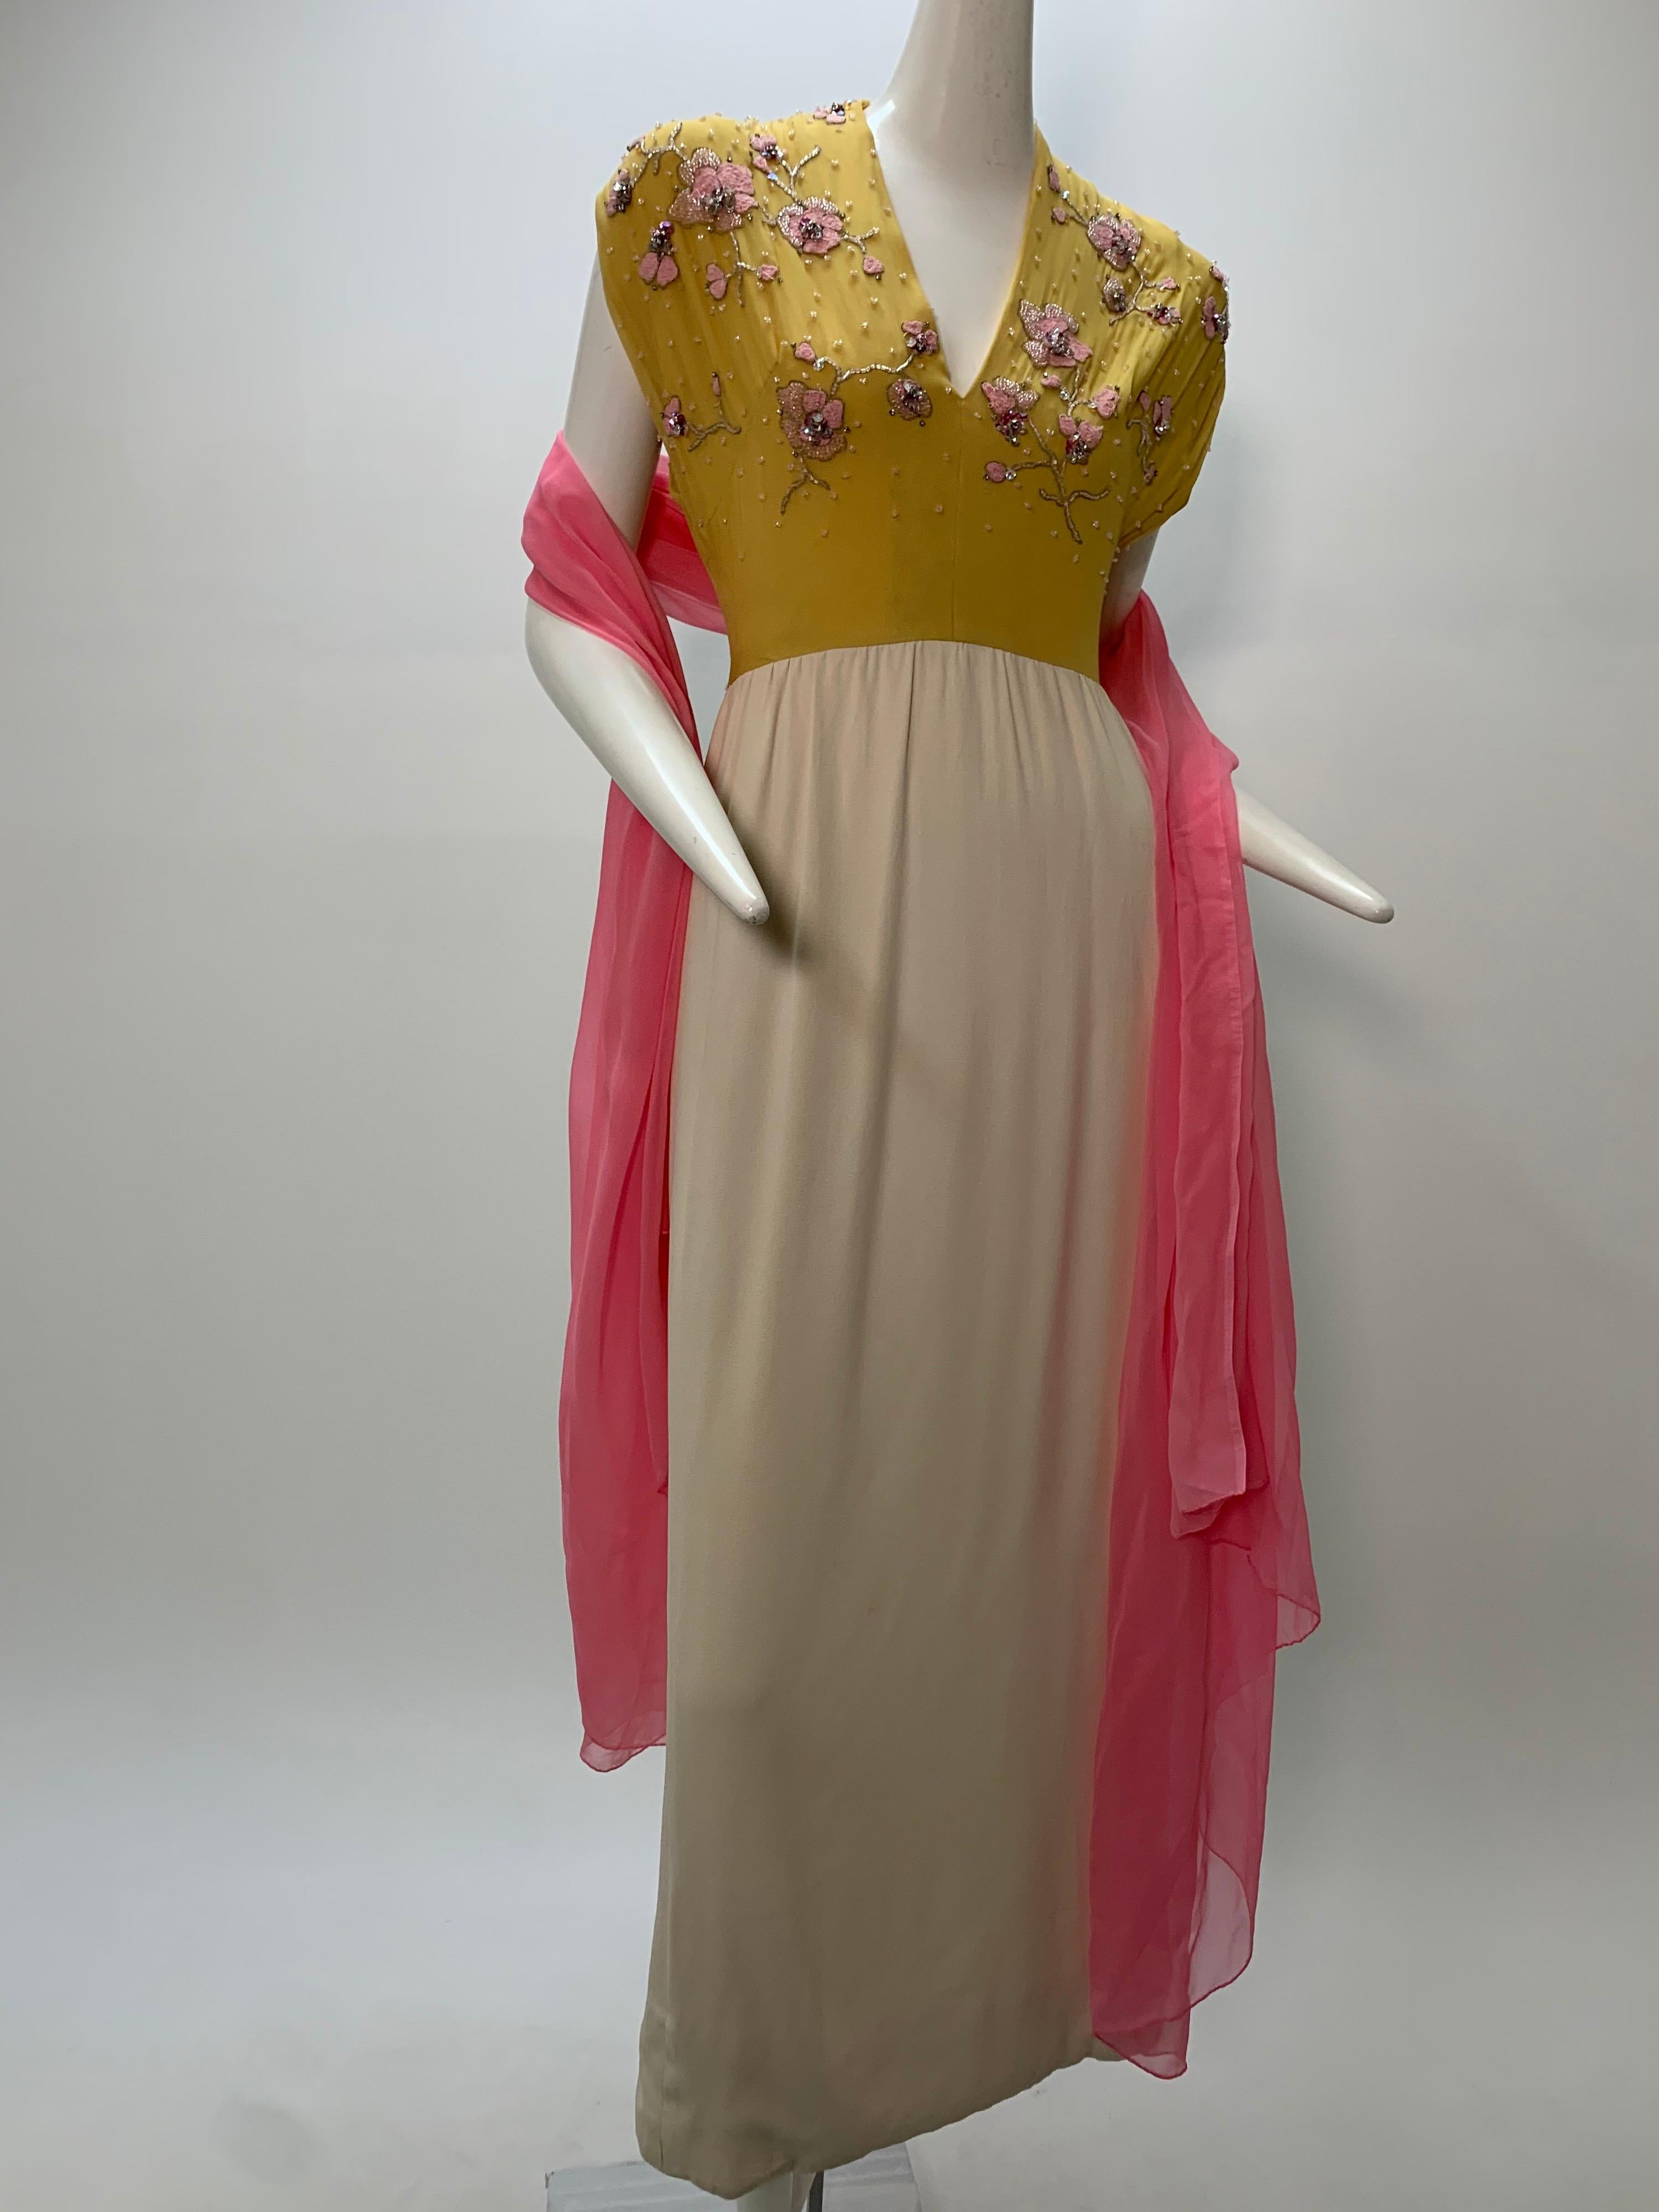 Women's 1960s John Hogan Crepe Dress w/ Mustard Floral Embroidered Bodice & Cream Skirt For Sale